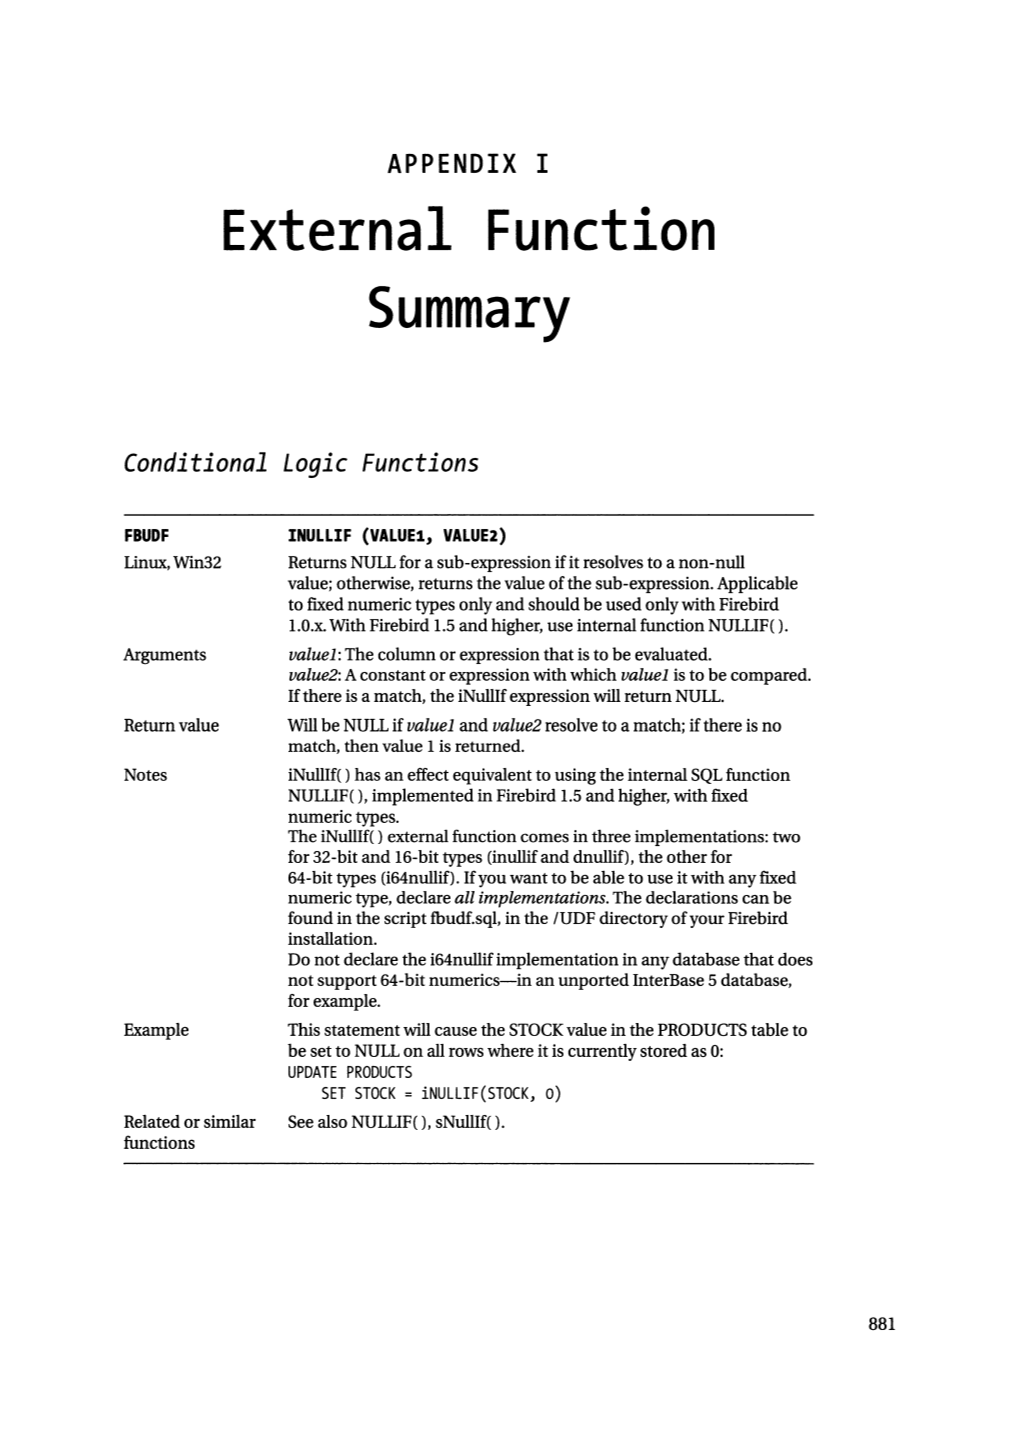 External Function Summary